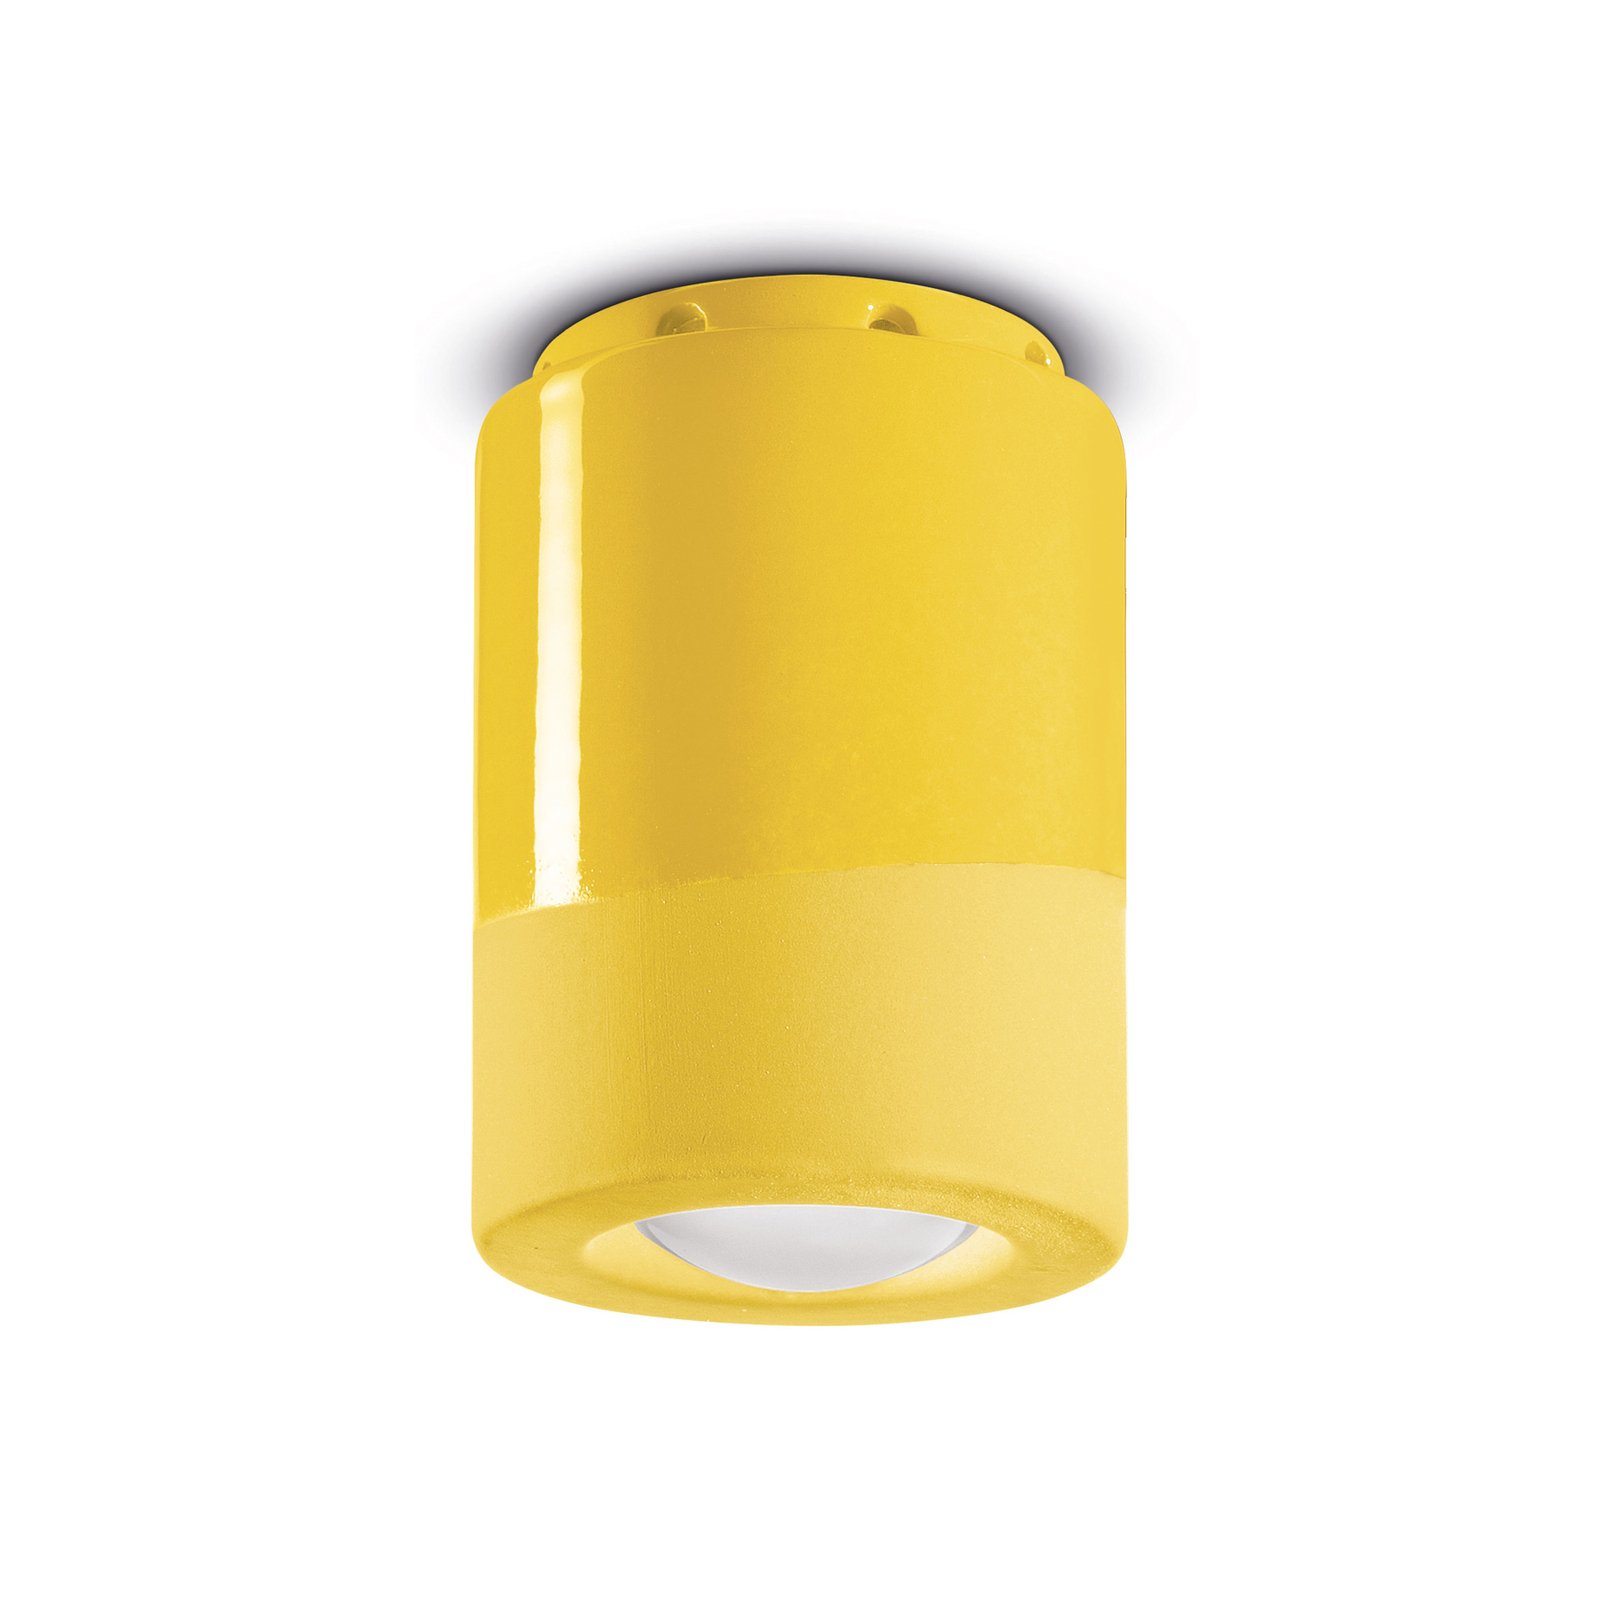 Deckenlampe PI, zylinderförmig, Ø 8,5 cm, gelb